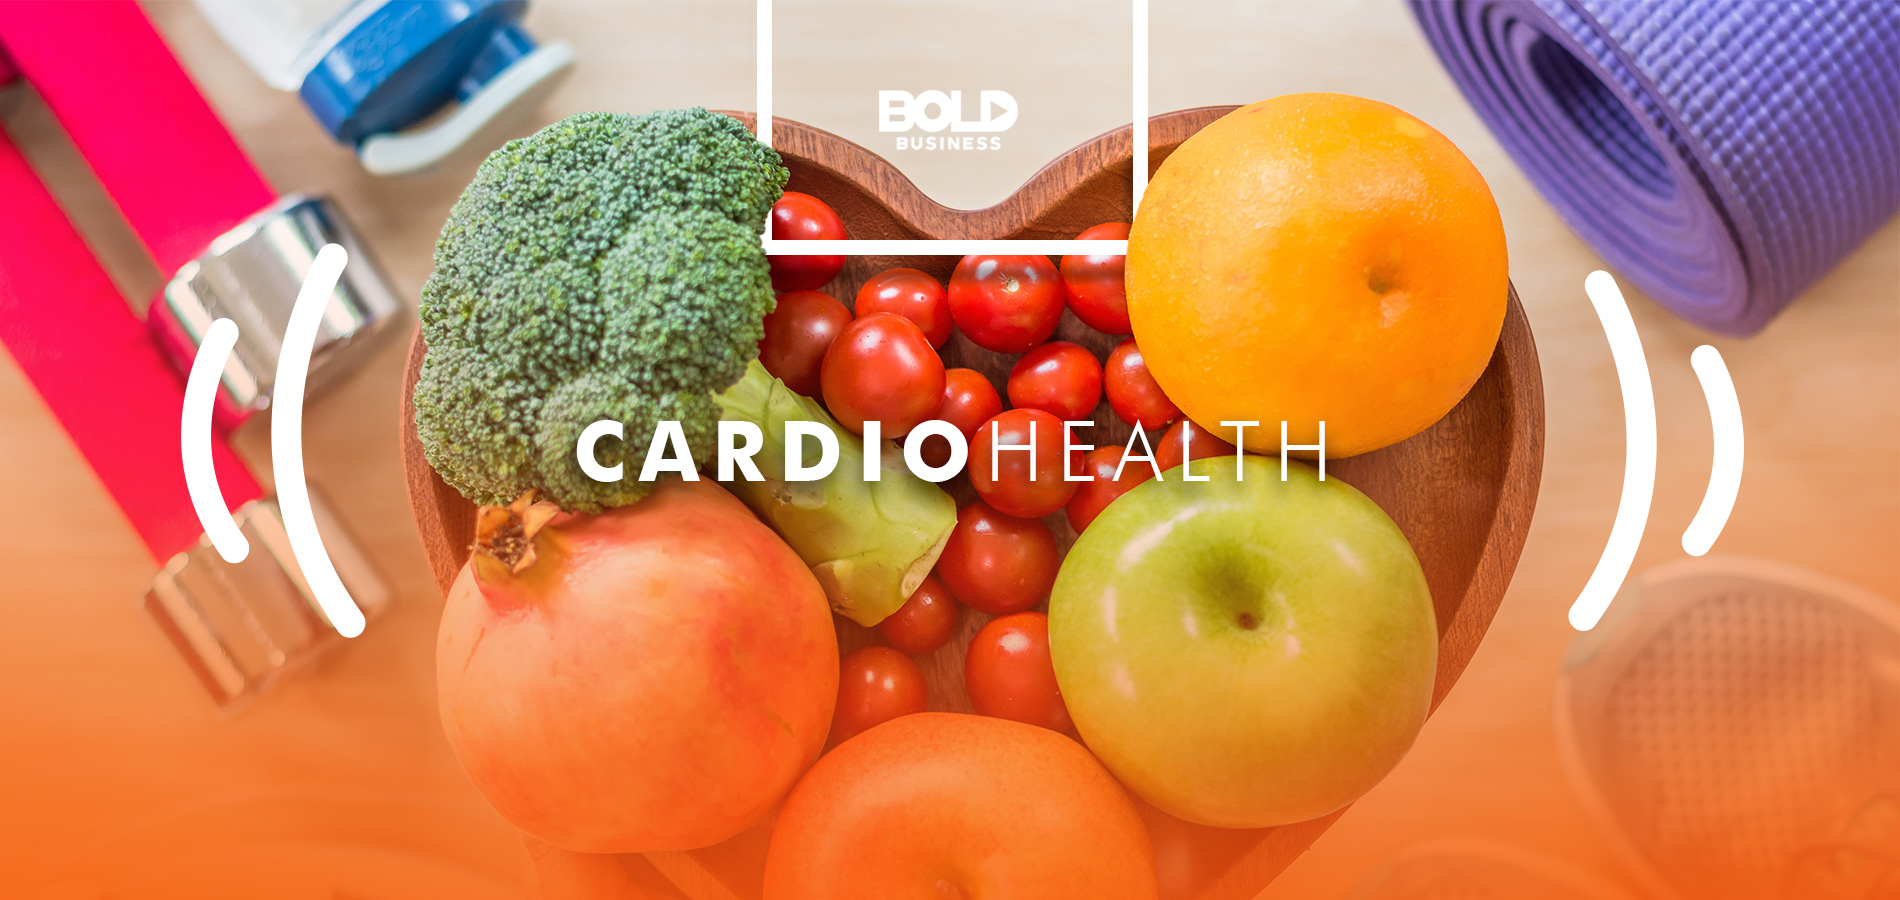 Cardiac healthy and lifestyle choices go hand in hand